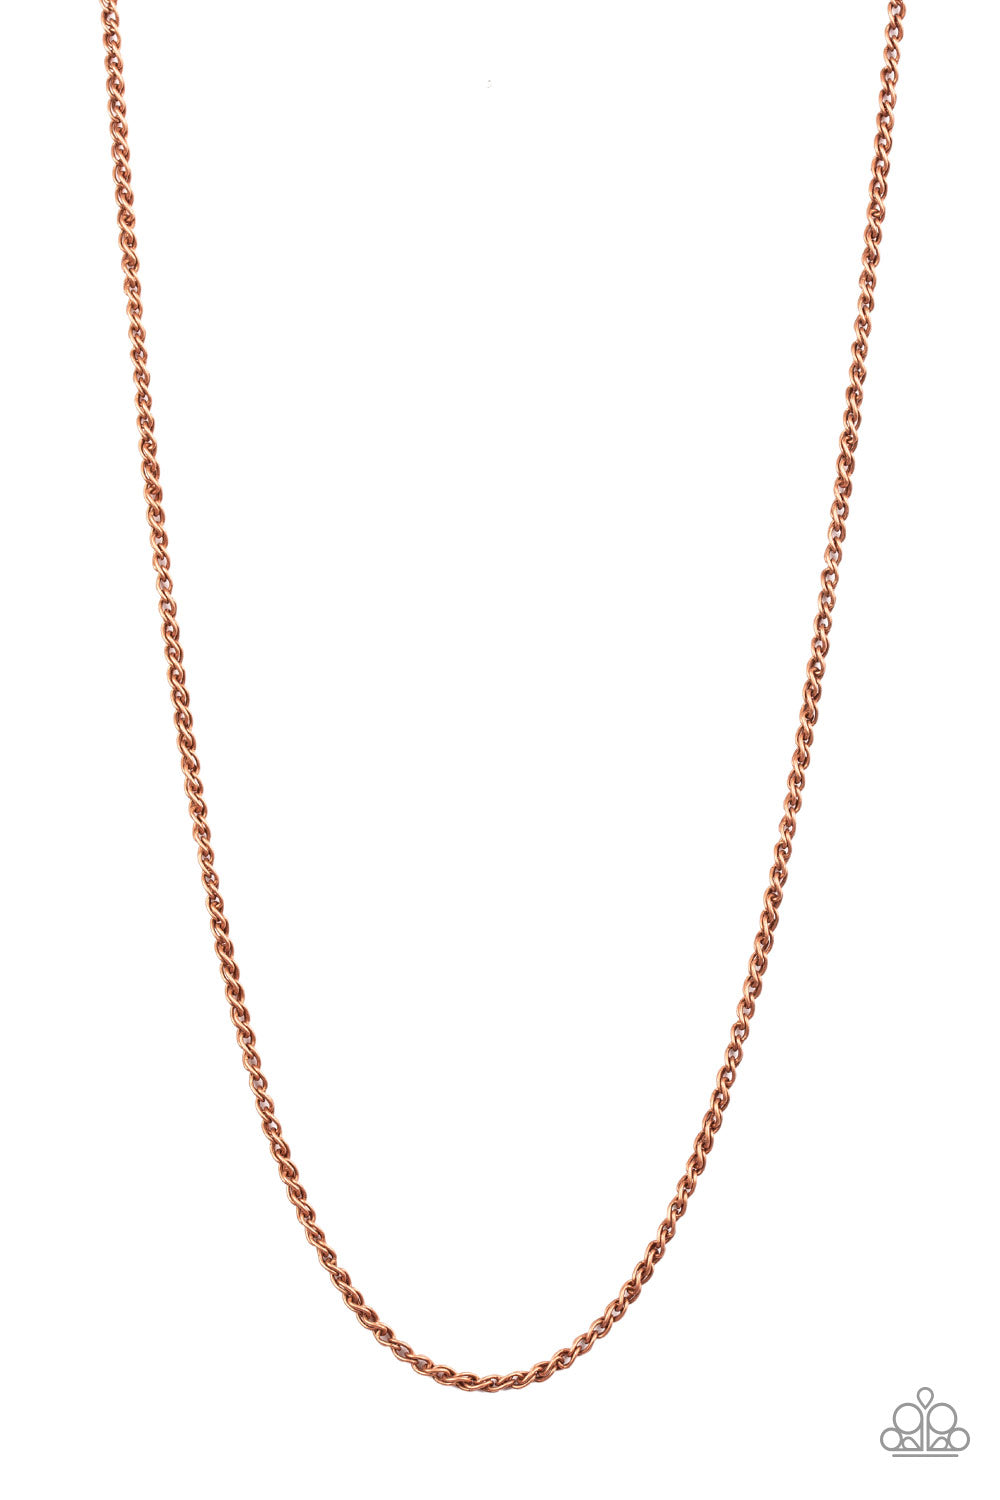 Jump Street - Copper Necklace freeshipping - JewLz4u Gemstone Gallery